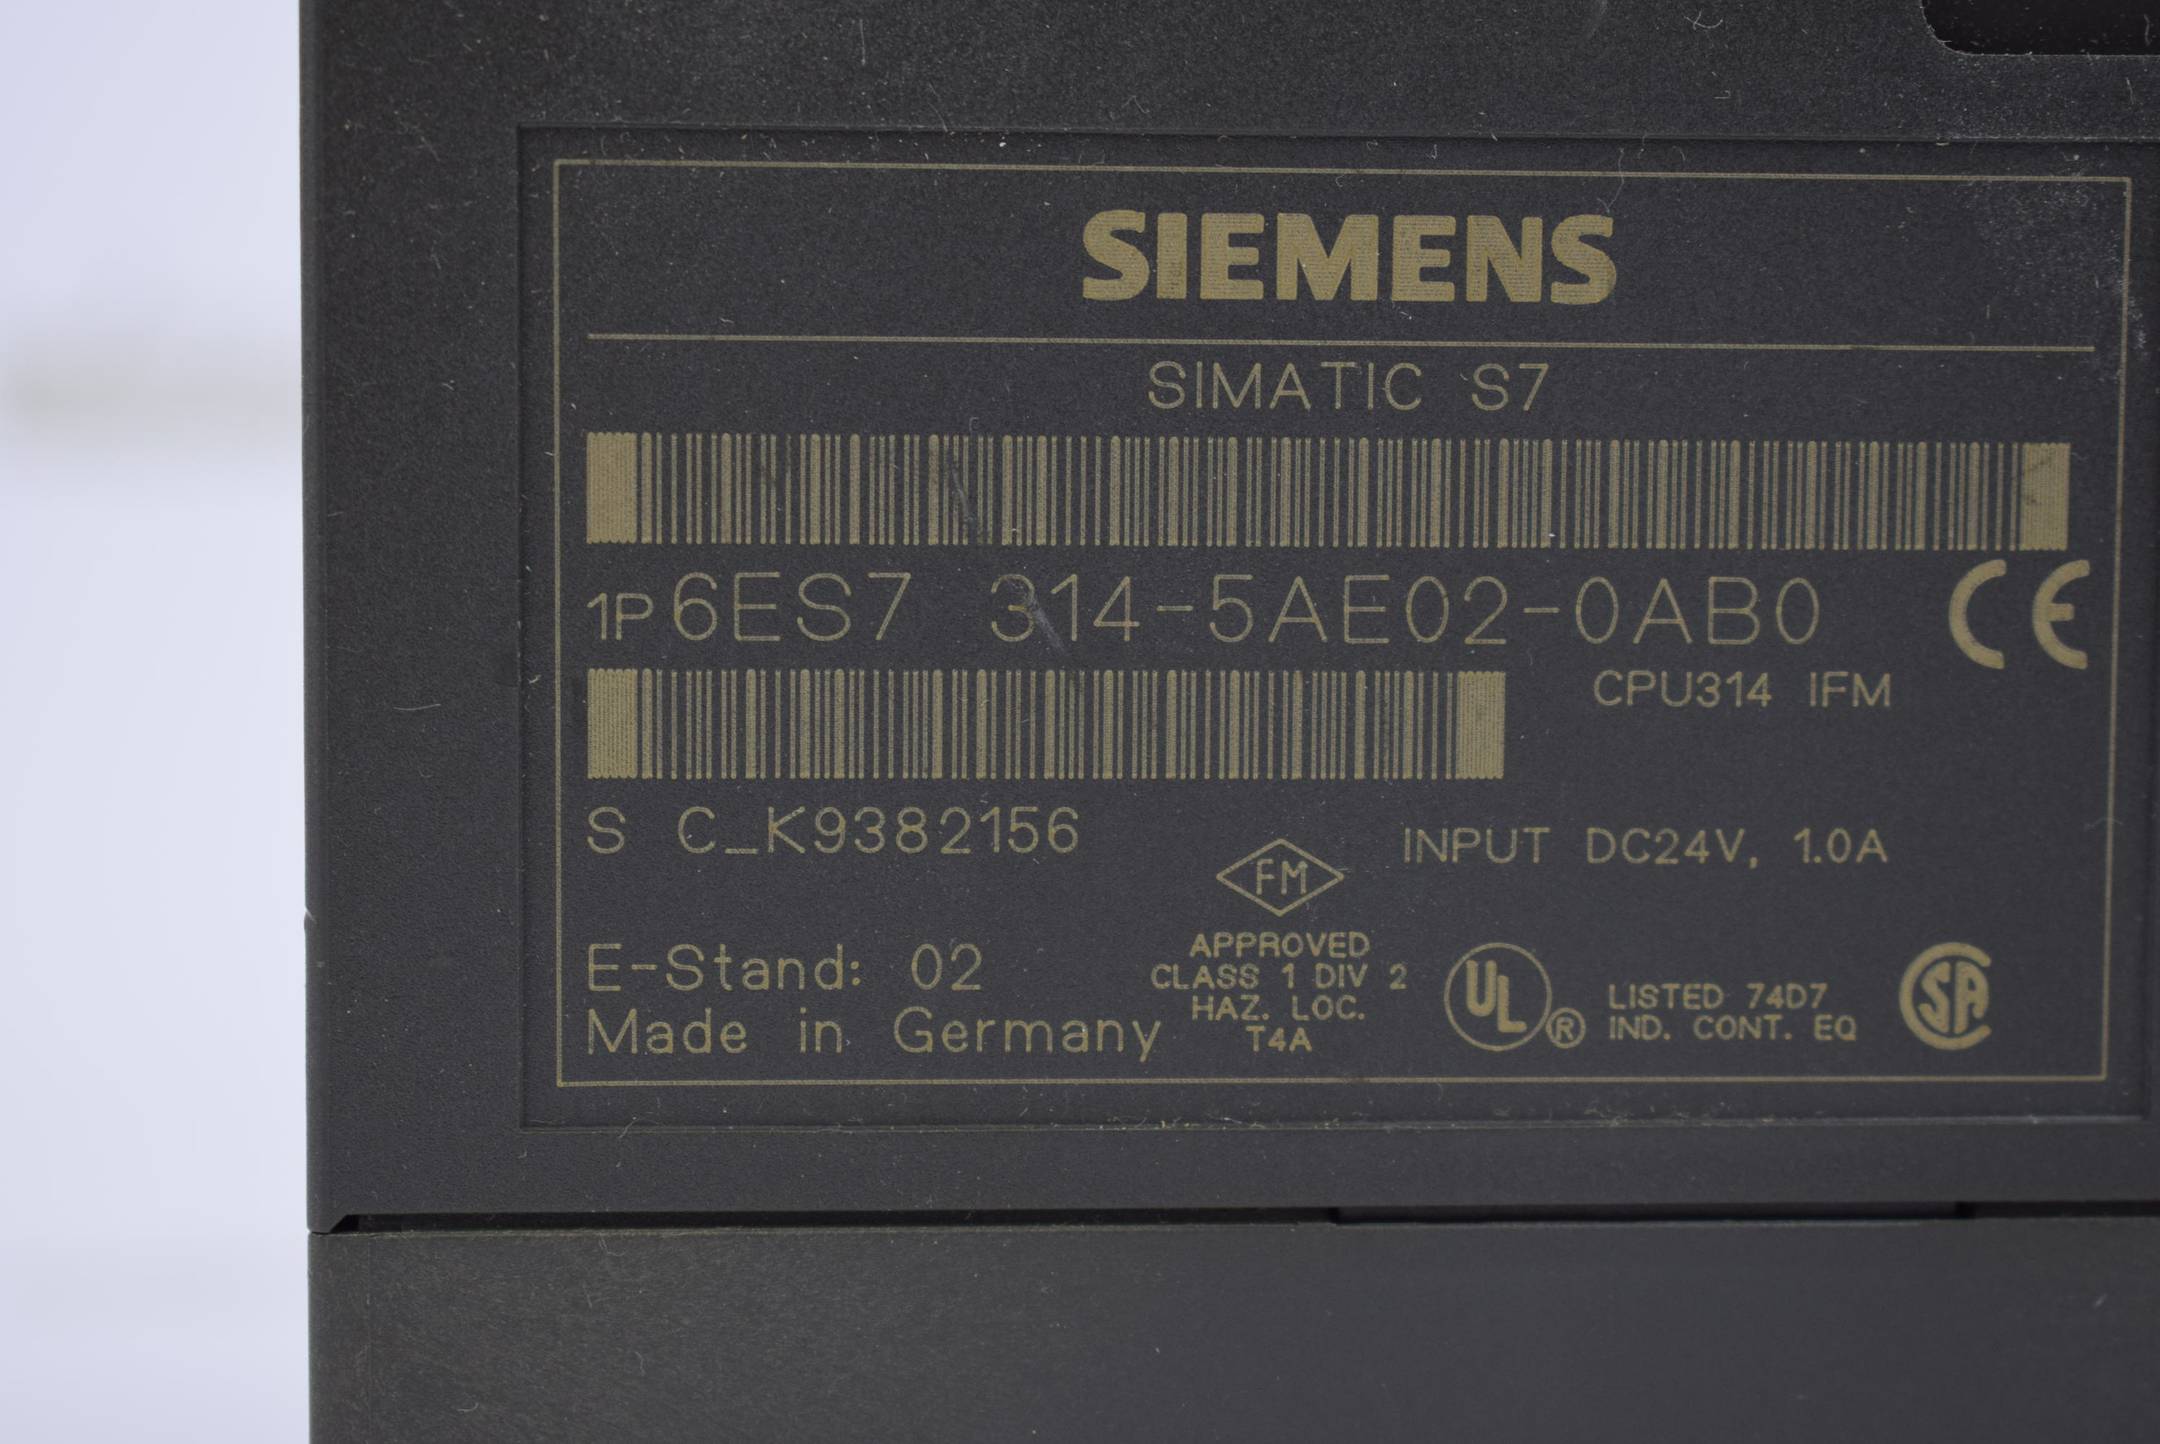 Siemens simatic S7-300 CPU314 IFM 6ES7 314-5AE02-0AB0 ( 6ES7314-5AE02-0AB0 ) E2